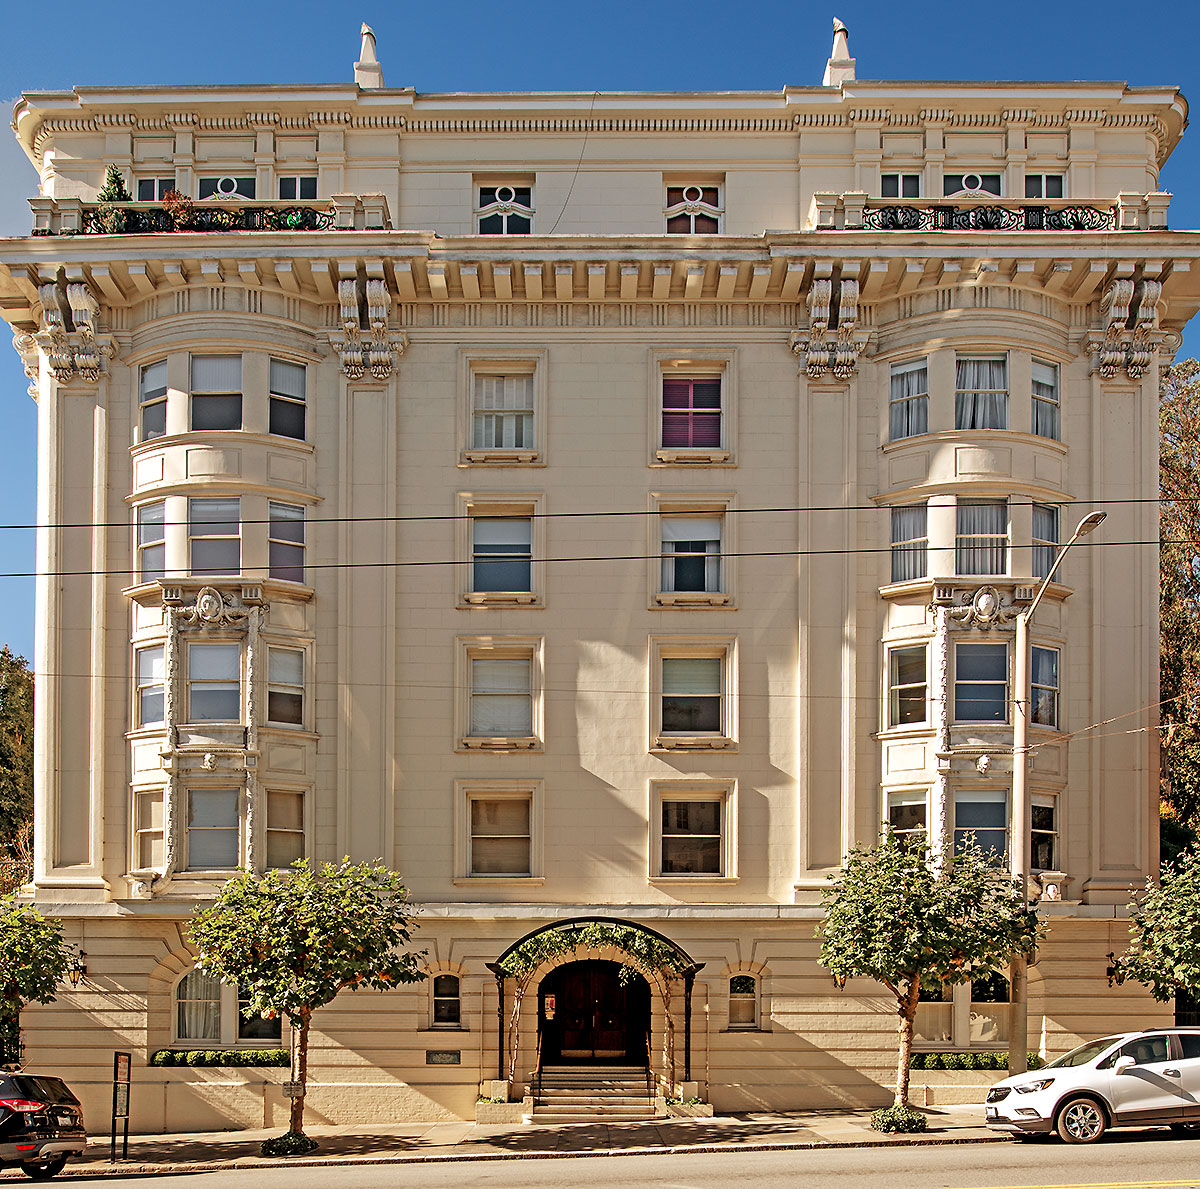 San Francisco Point of Historic Interest: St. Regis Apartments